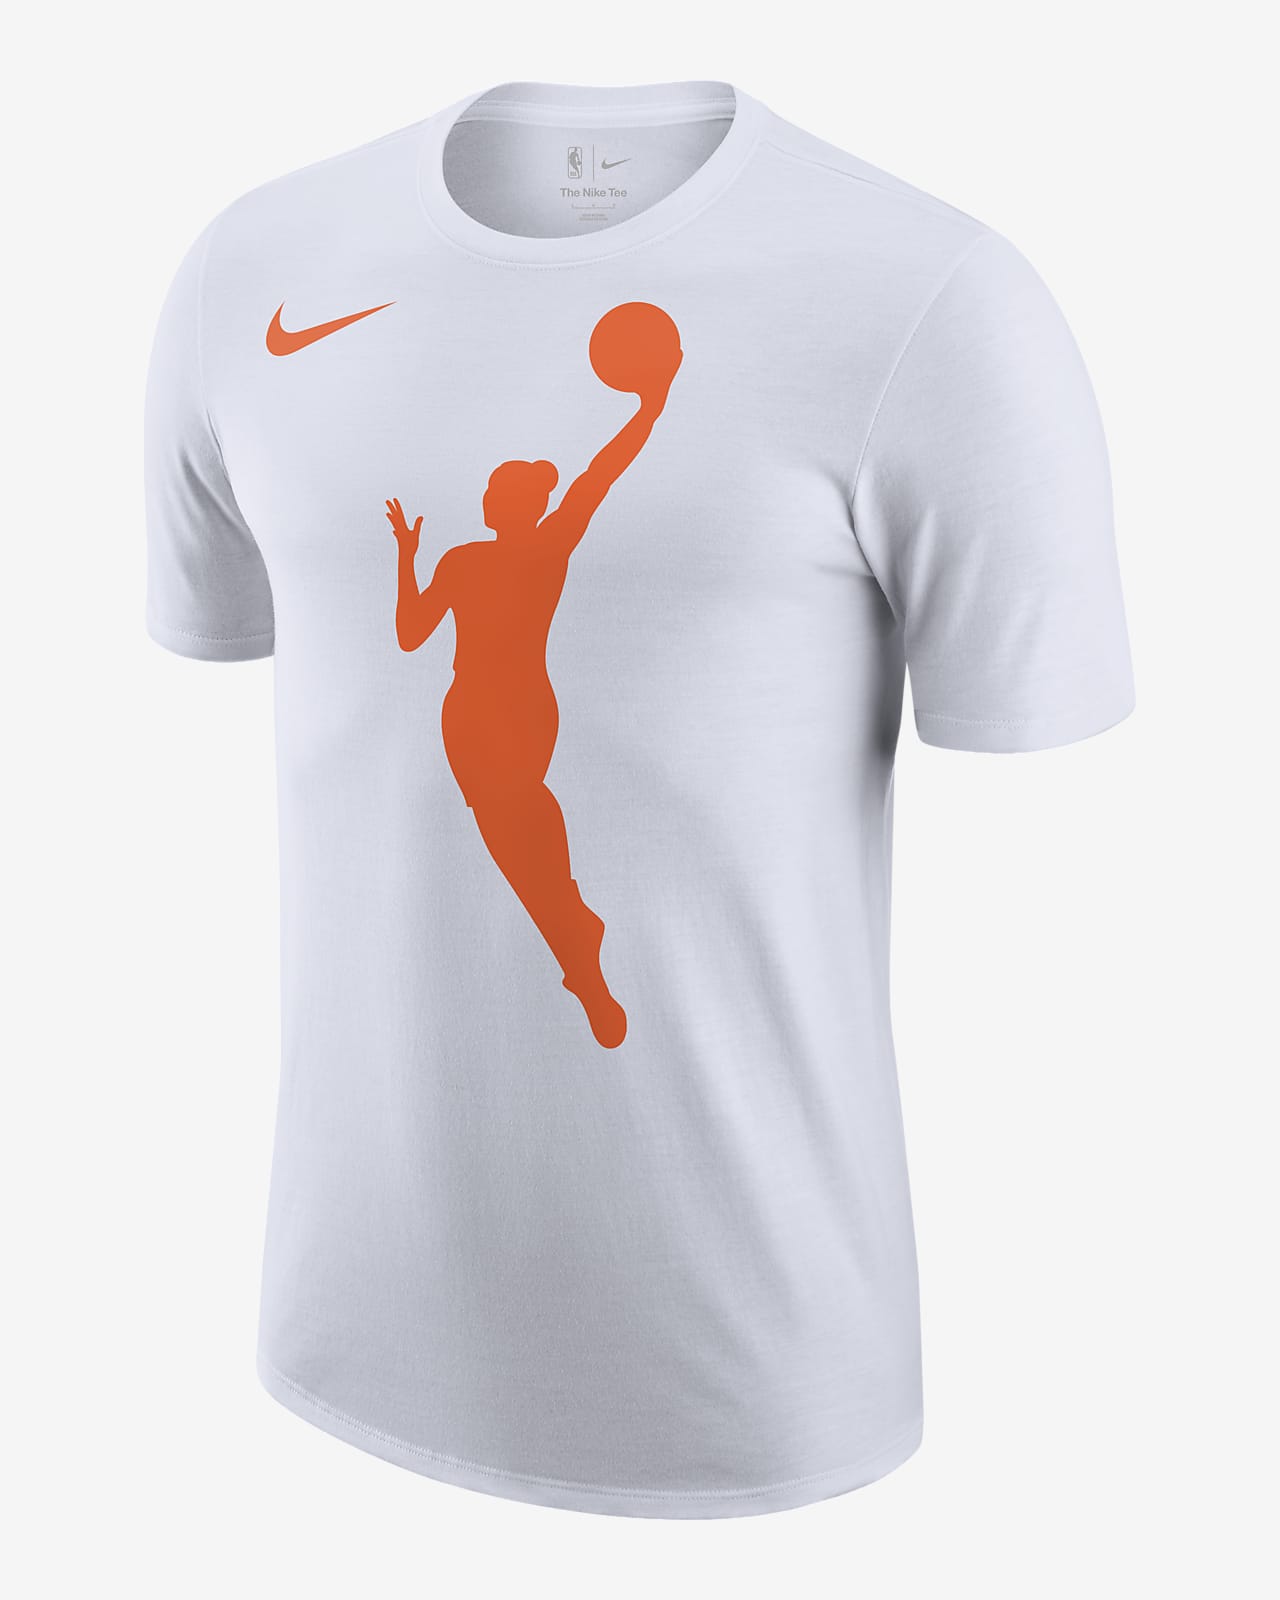 Team 13 Nike WNBA T-shirt